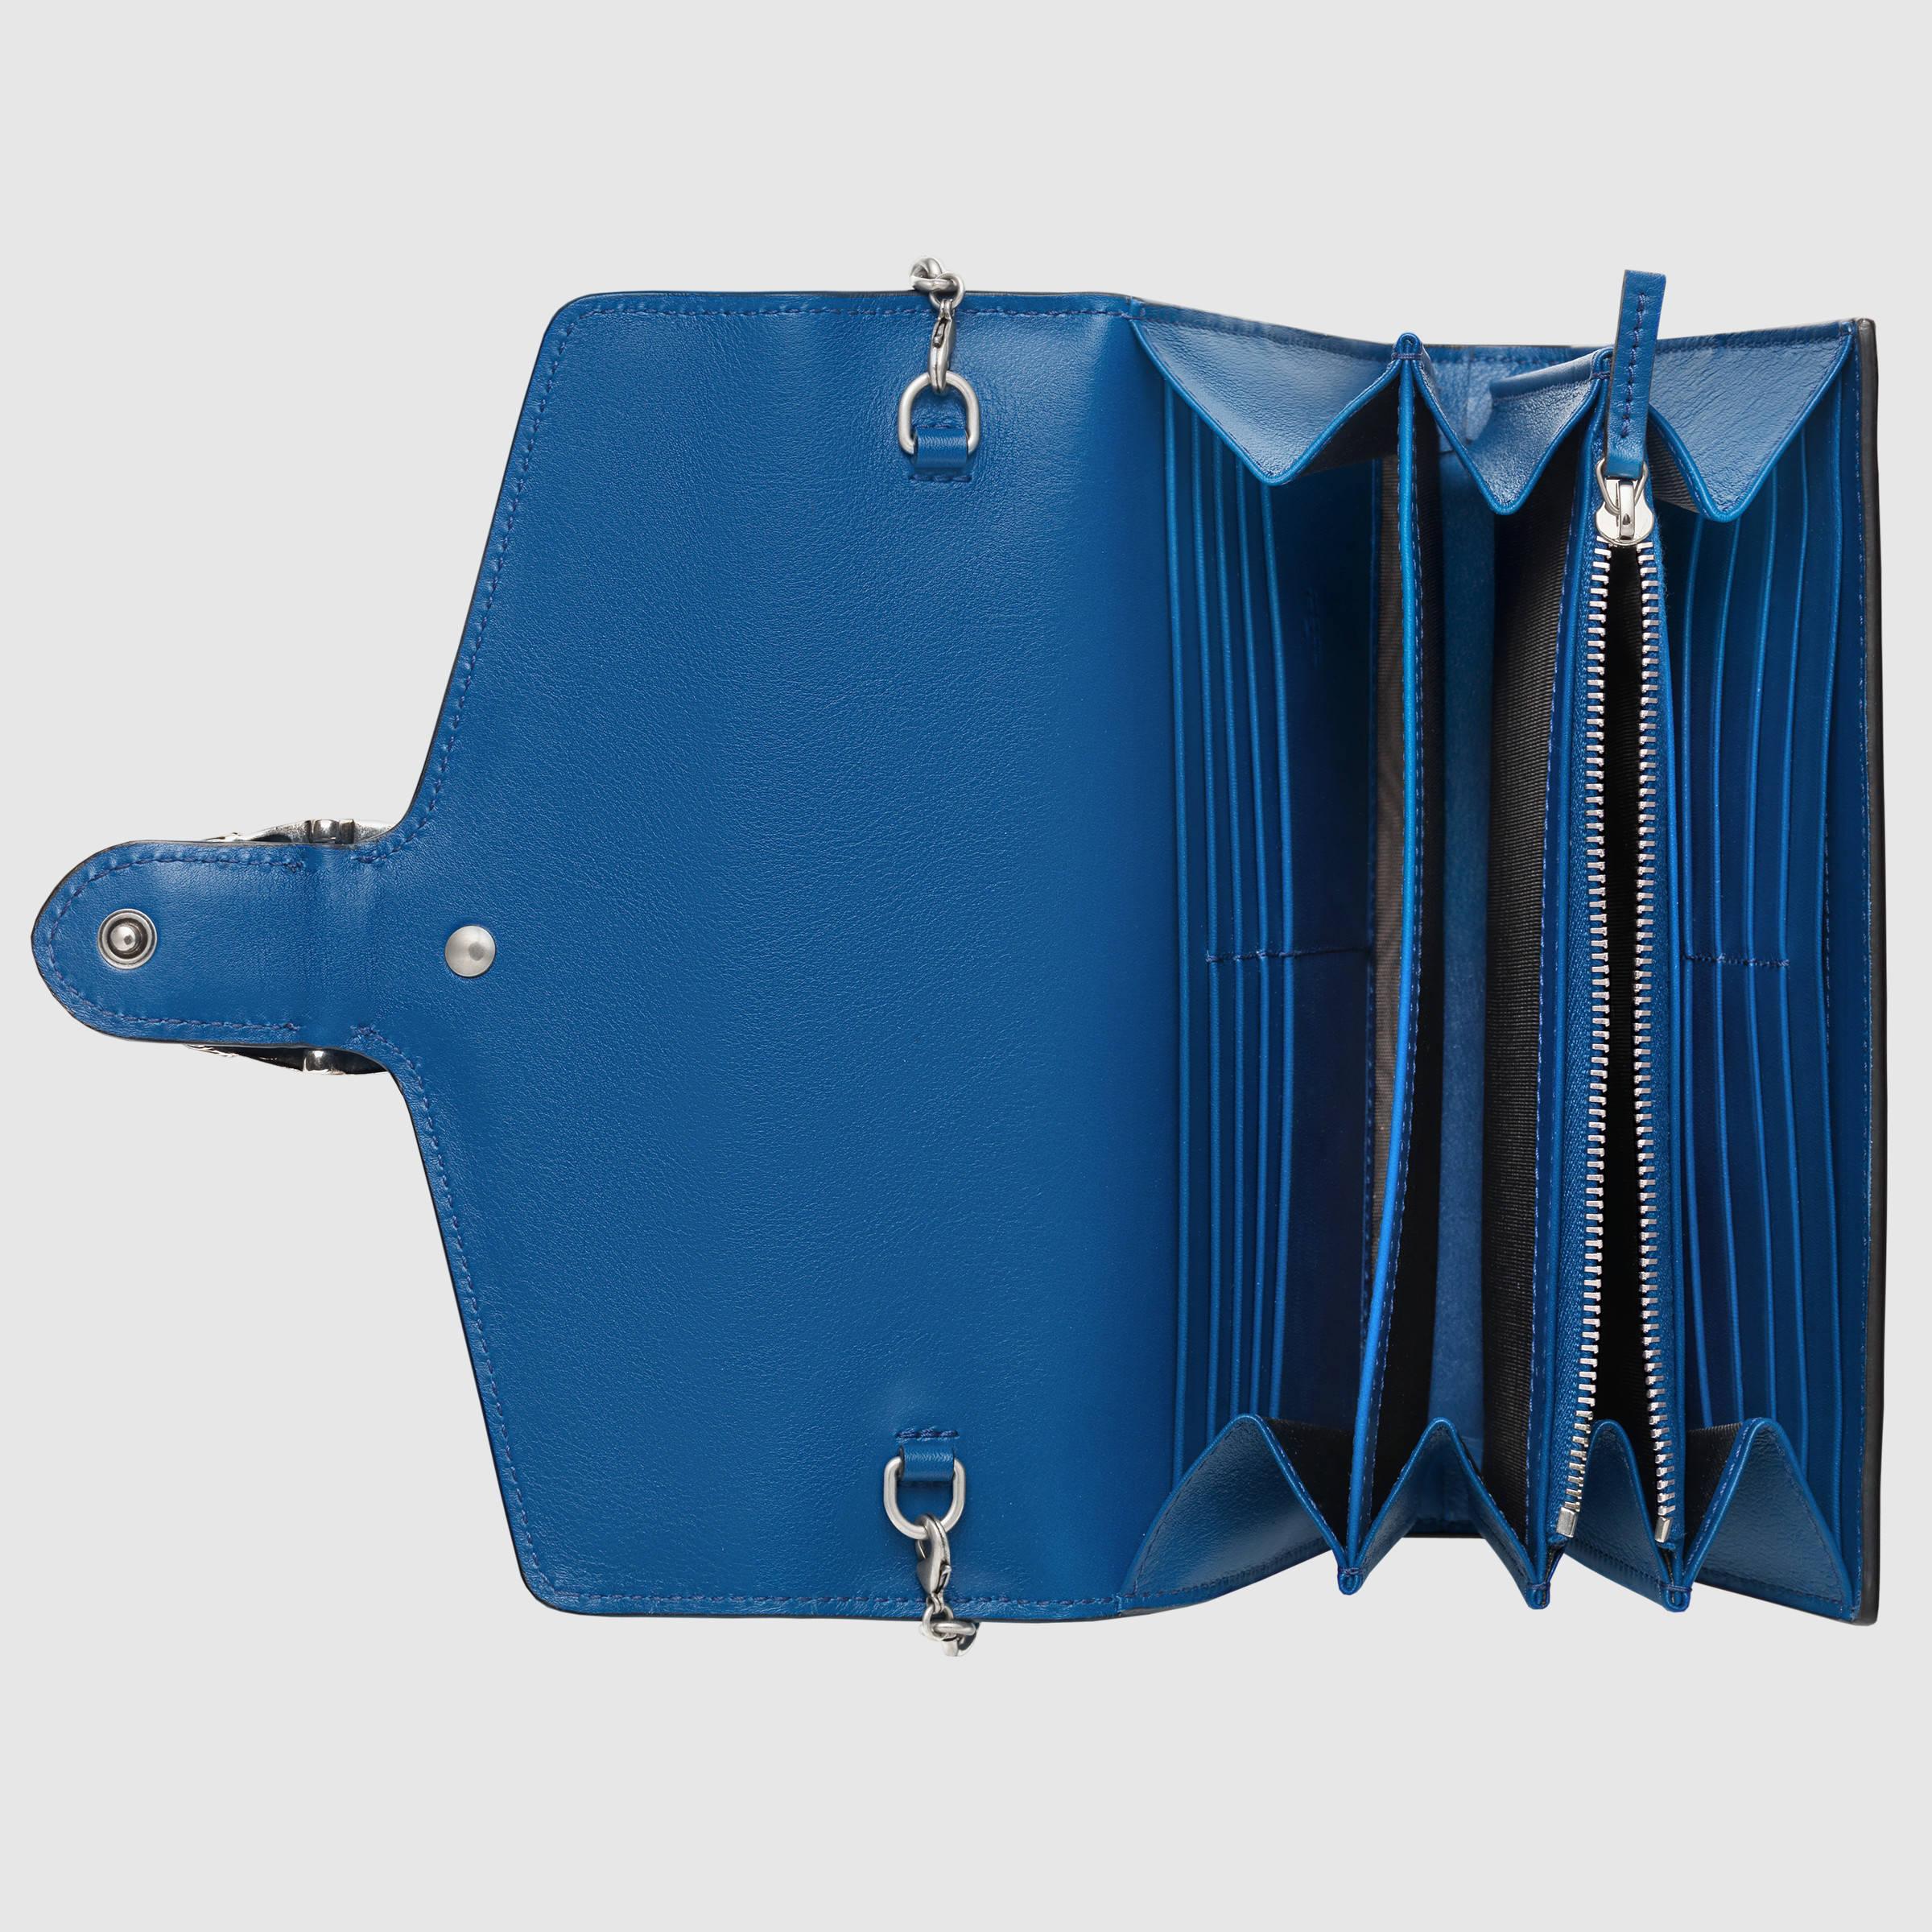 Lyst - Gucci Dionysus Suede Mini Chain Shoulder Bag in Blue